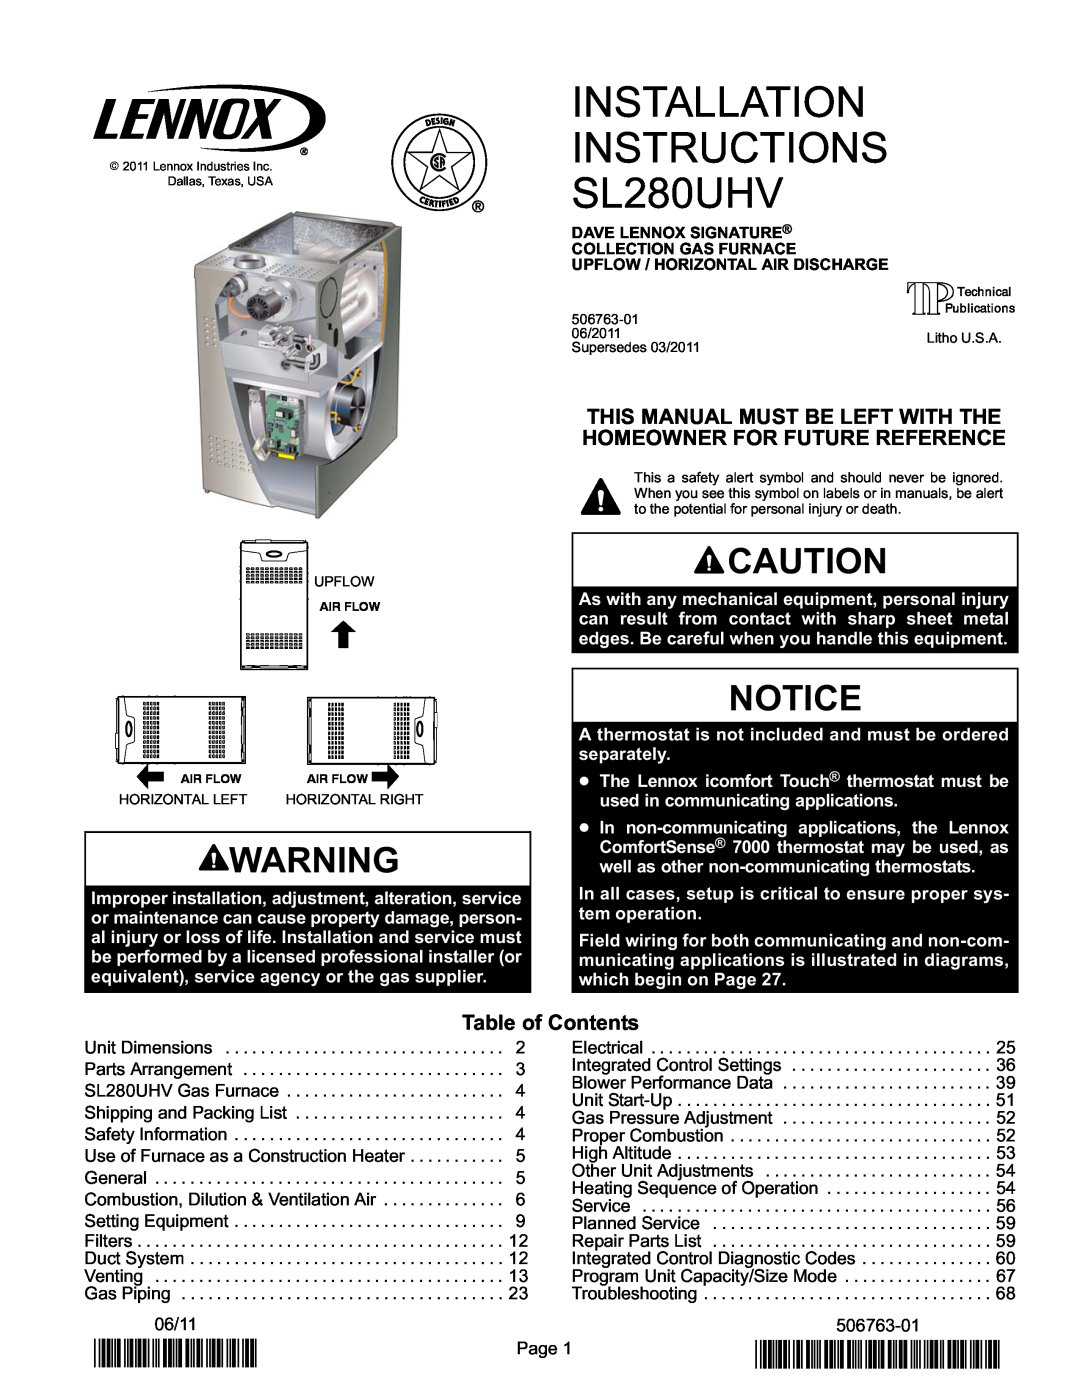 Lennox International Inc SL280UH070V36A installation instructions Table of Contents, INSTALLATION INSTRUCTIONS SL280UHV 